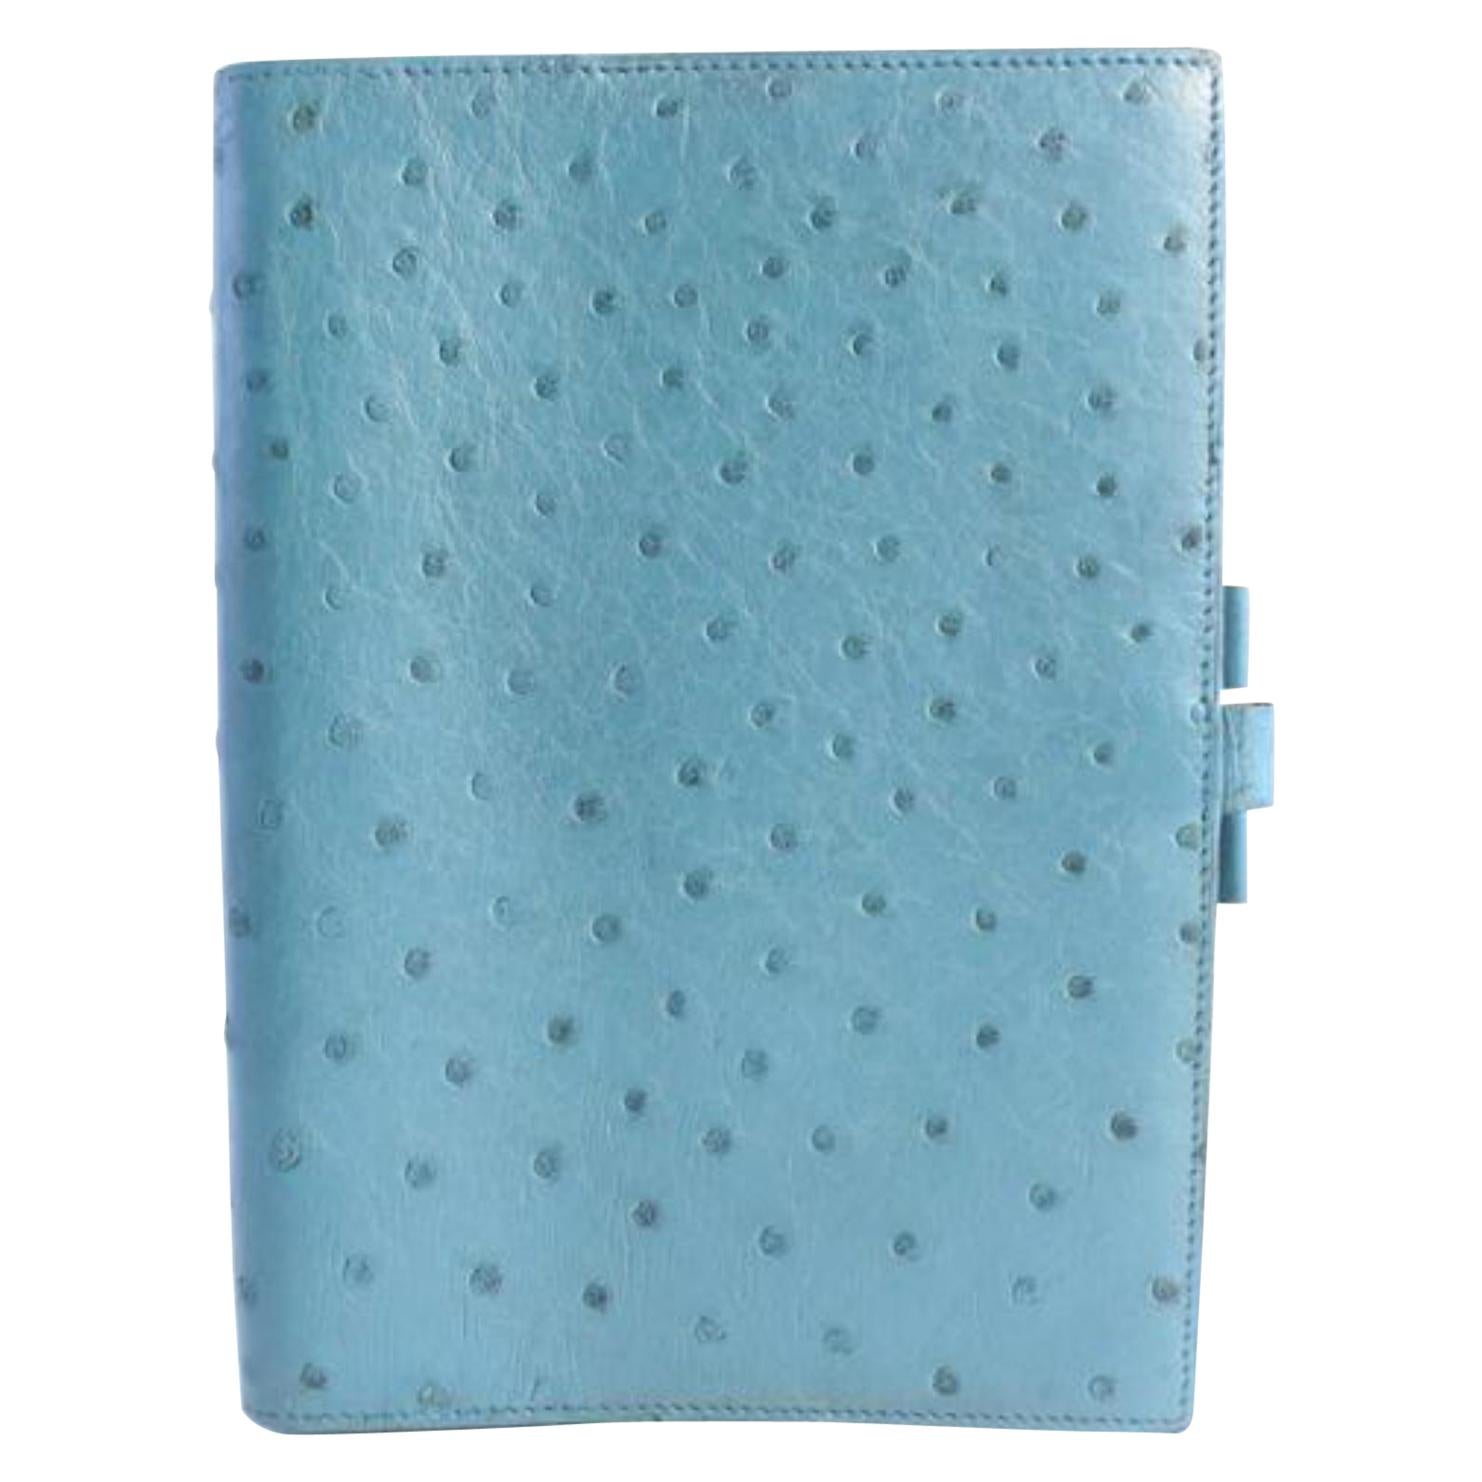 Hermès Blue Ostrich Leather Vision Large Agenda Notebook Cover 7hz0821 Tech  For Sale